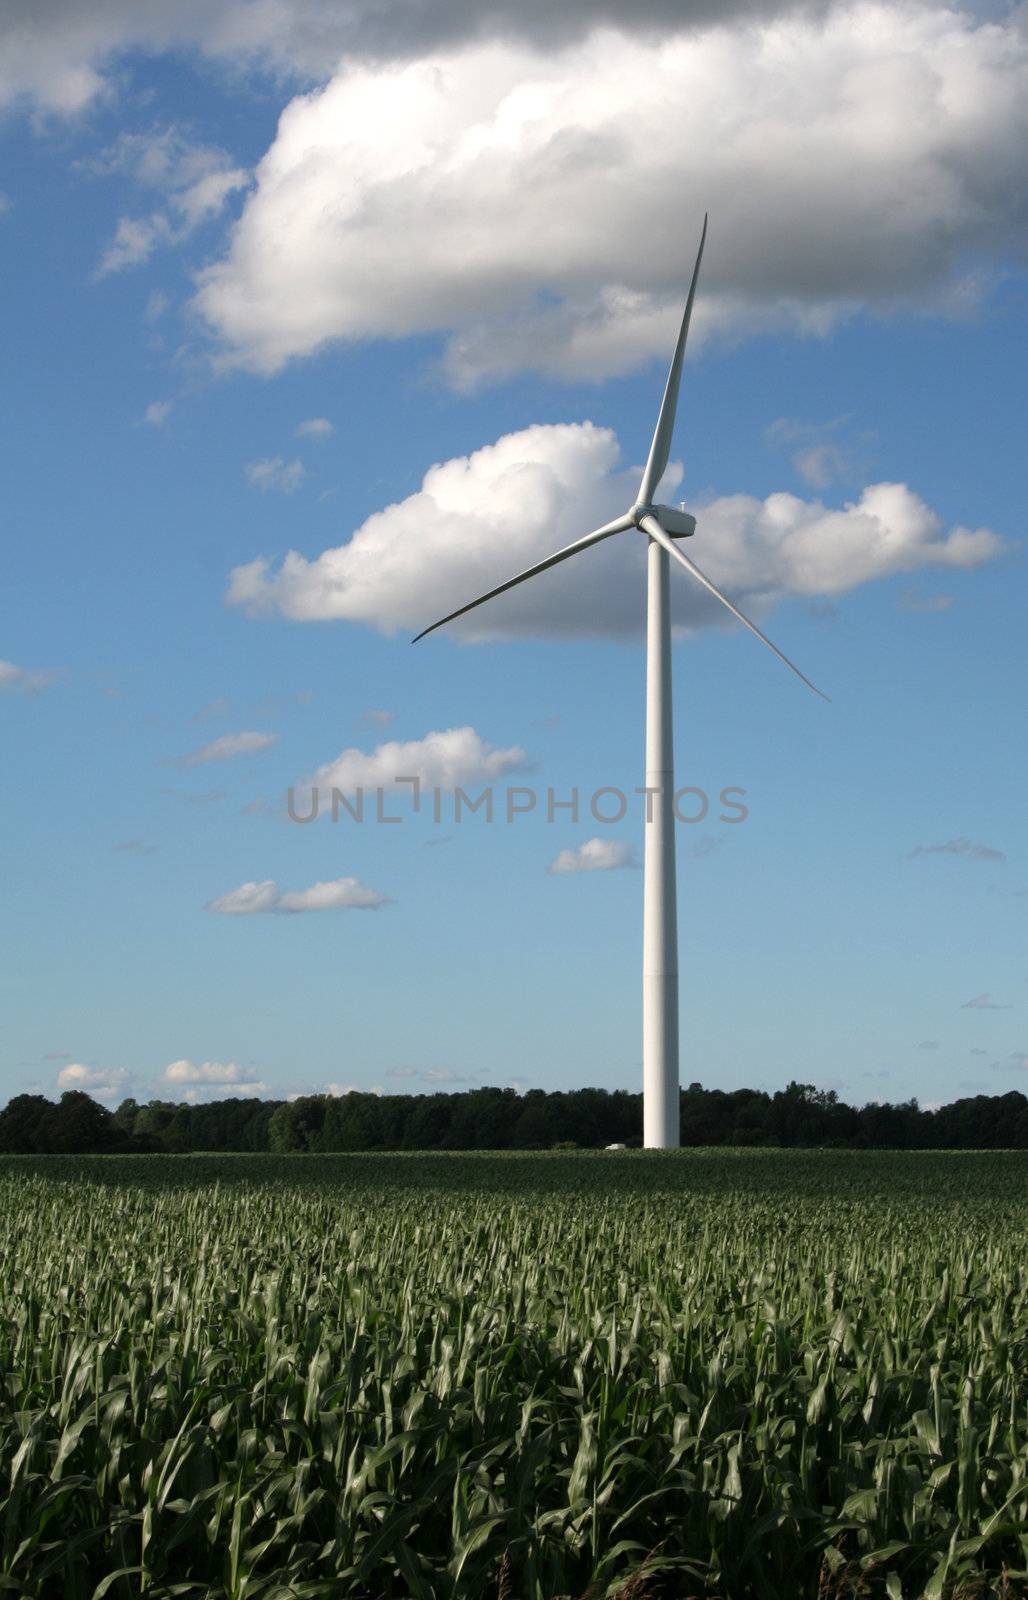 A wind power generator in a corn field shot against a blue sky.
